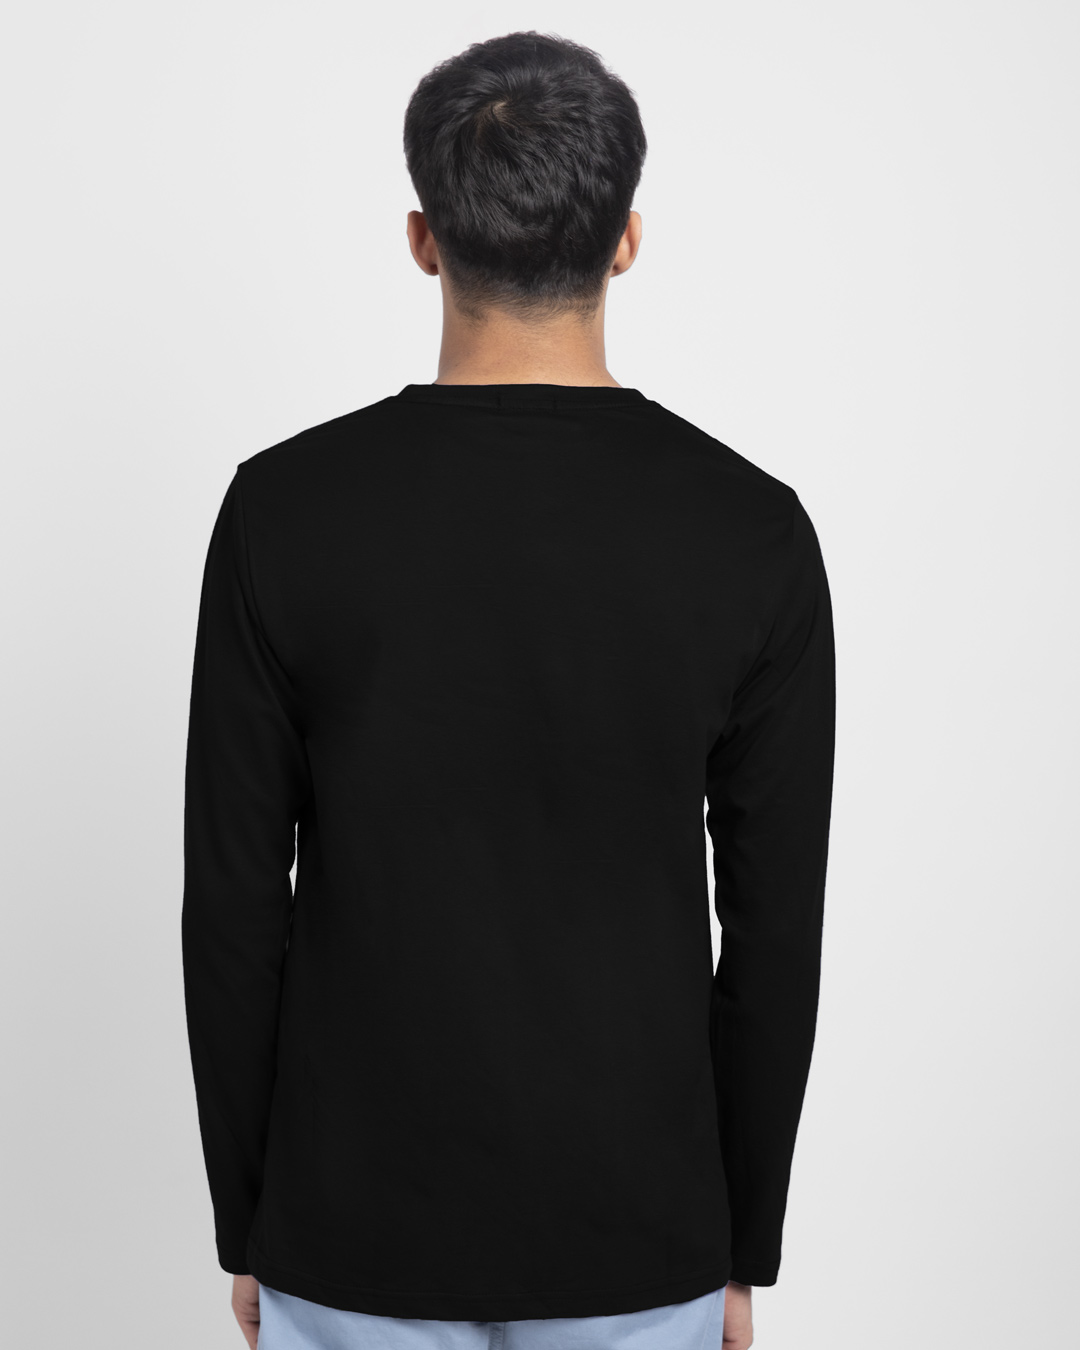 Shop Adventure Mickey Full Sleeve T-Shirt (DL) Black-Back